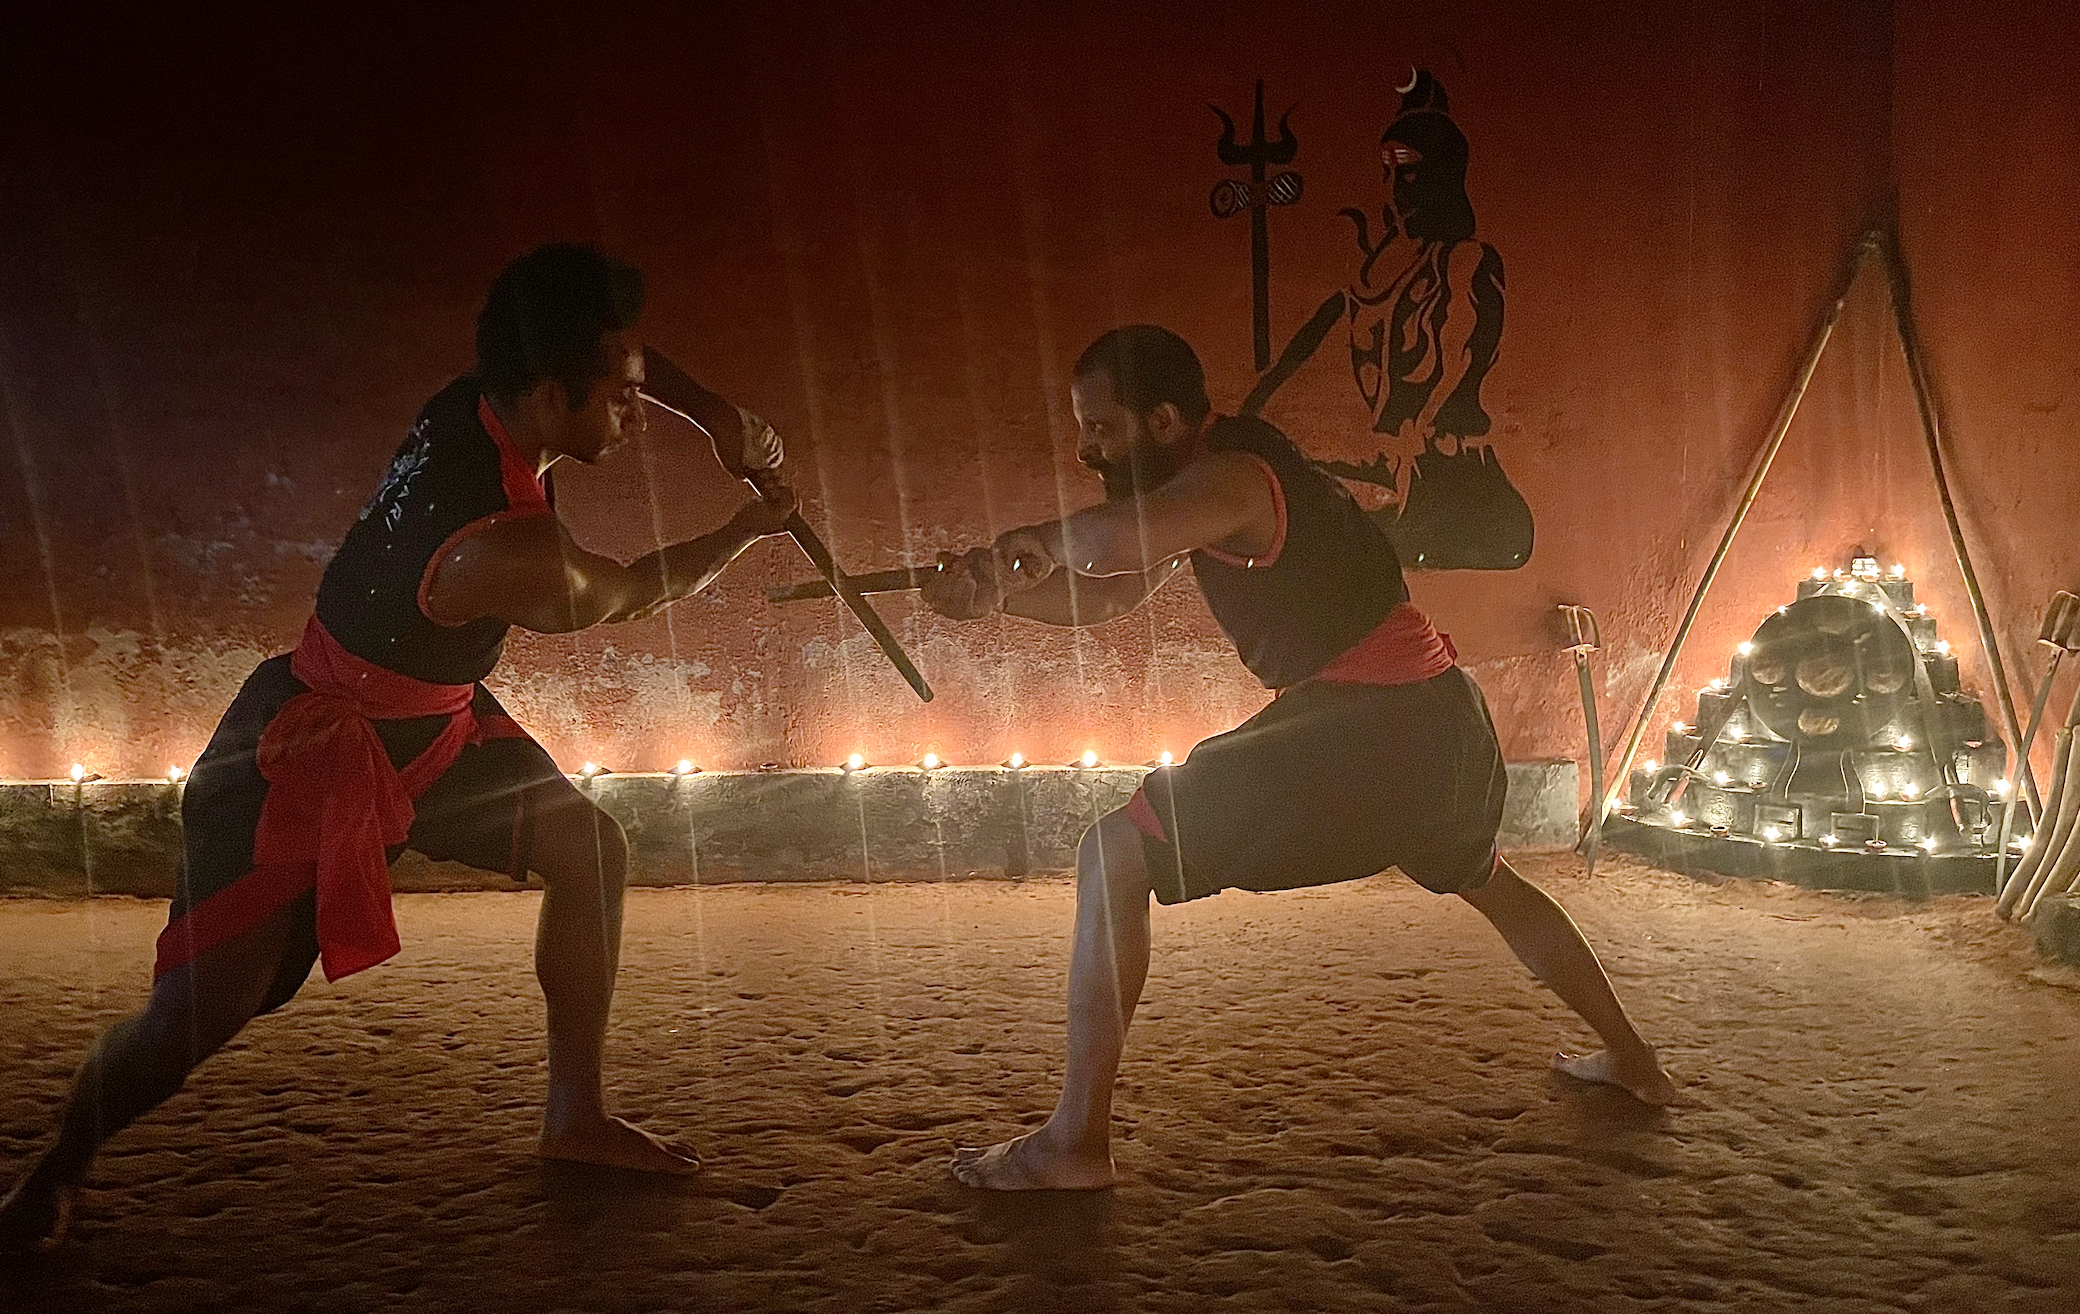 Short Stick Fighting, Kalaripayattu, Martial arts of Kerala